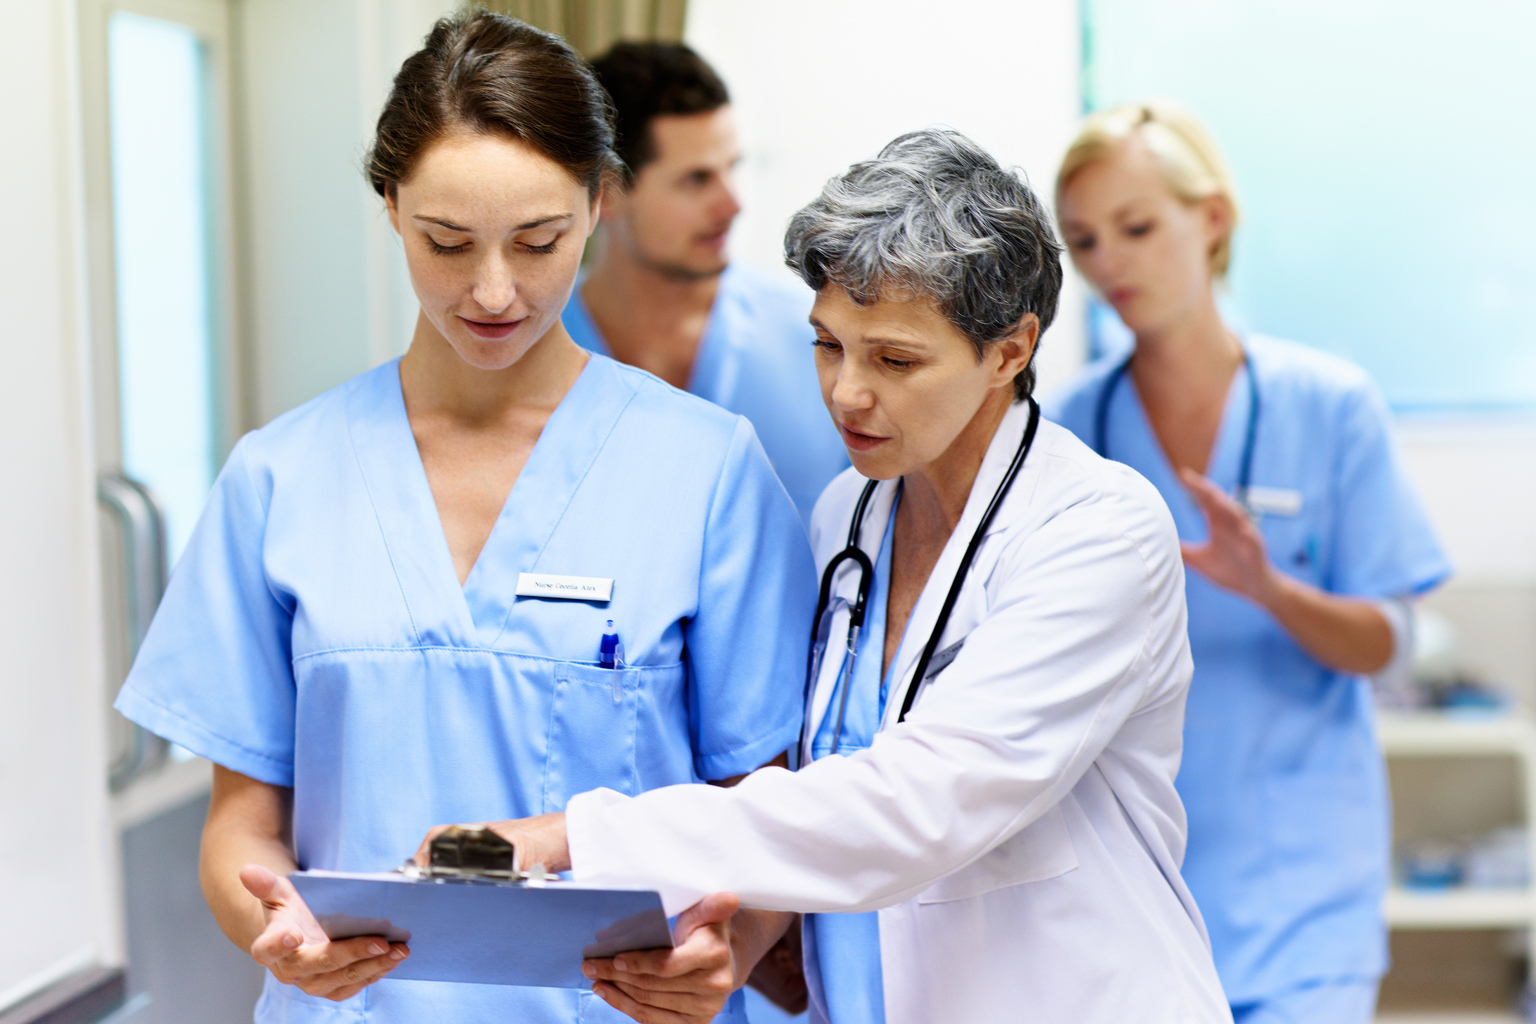 Female doctors walking and talking in a hospital corridor.